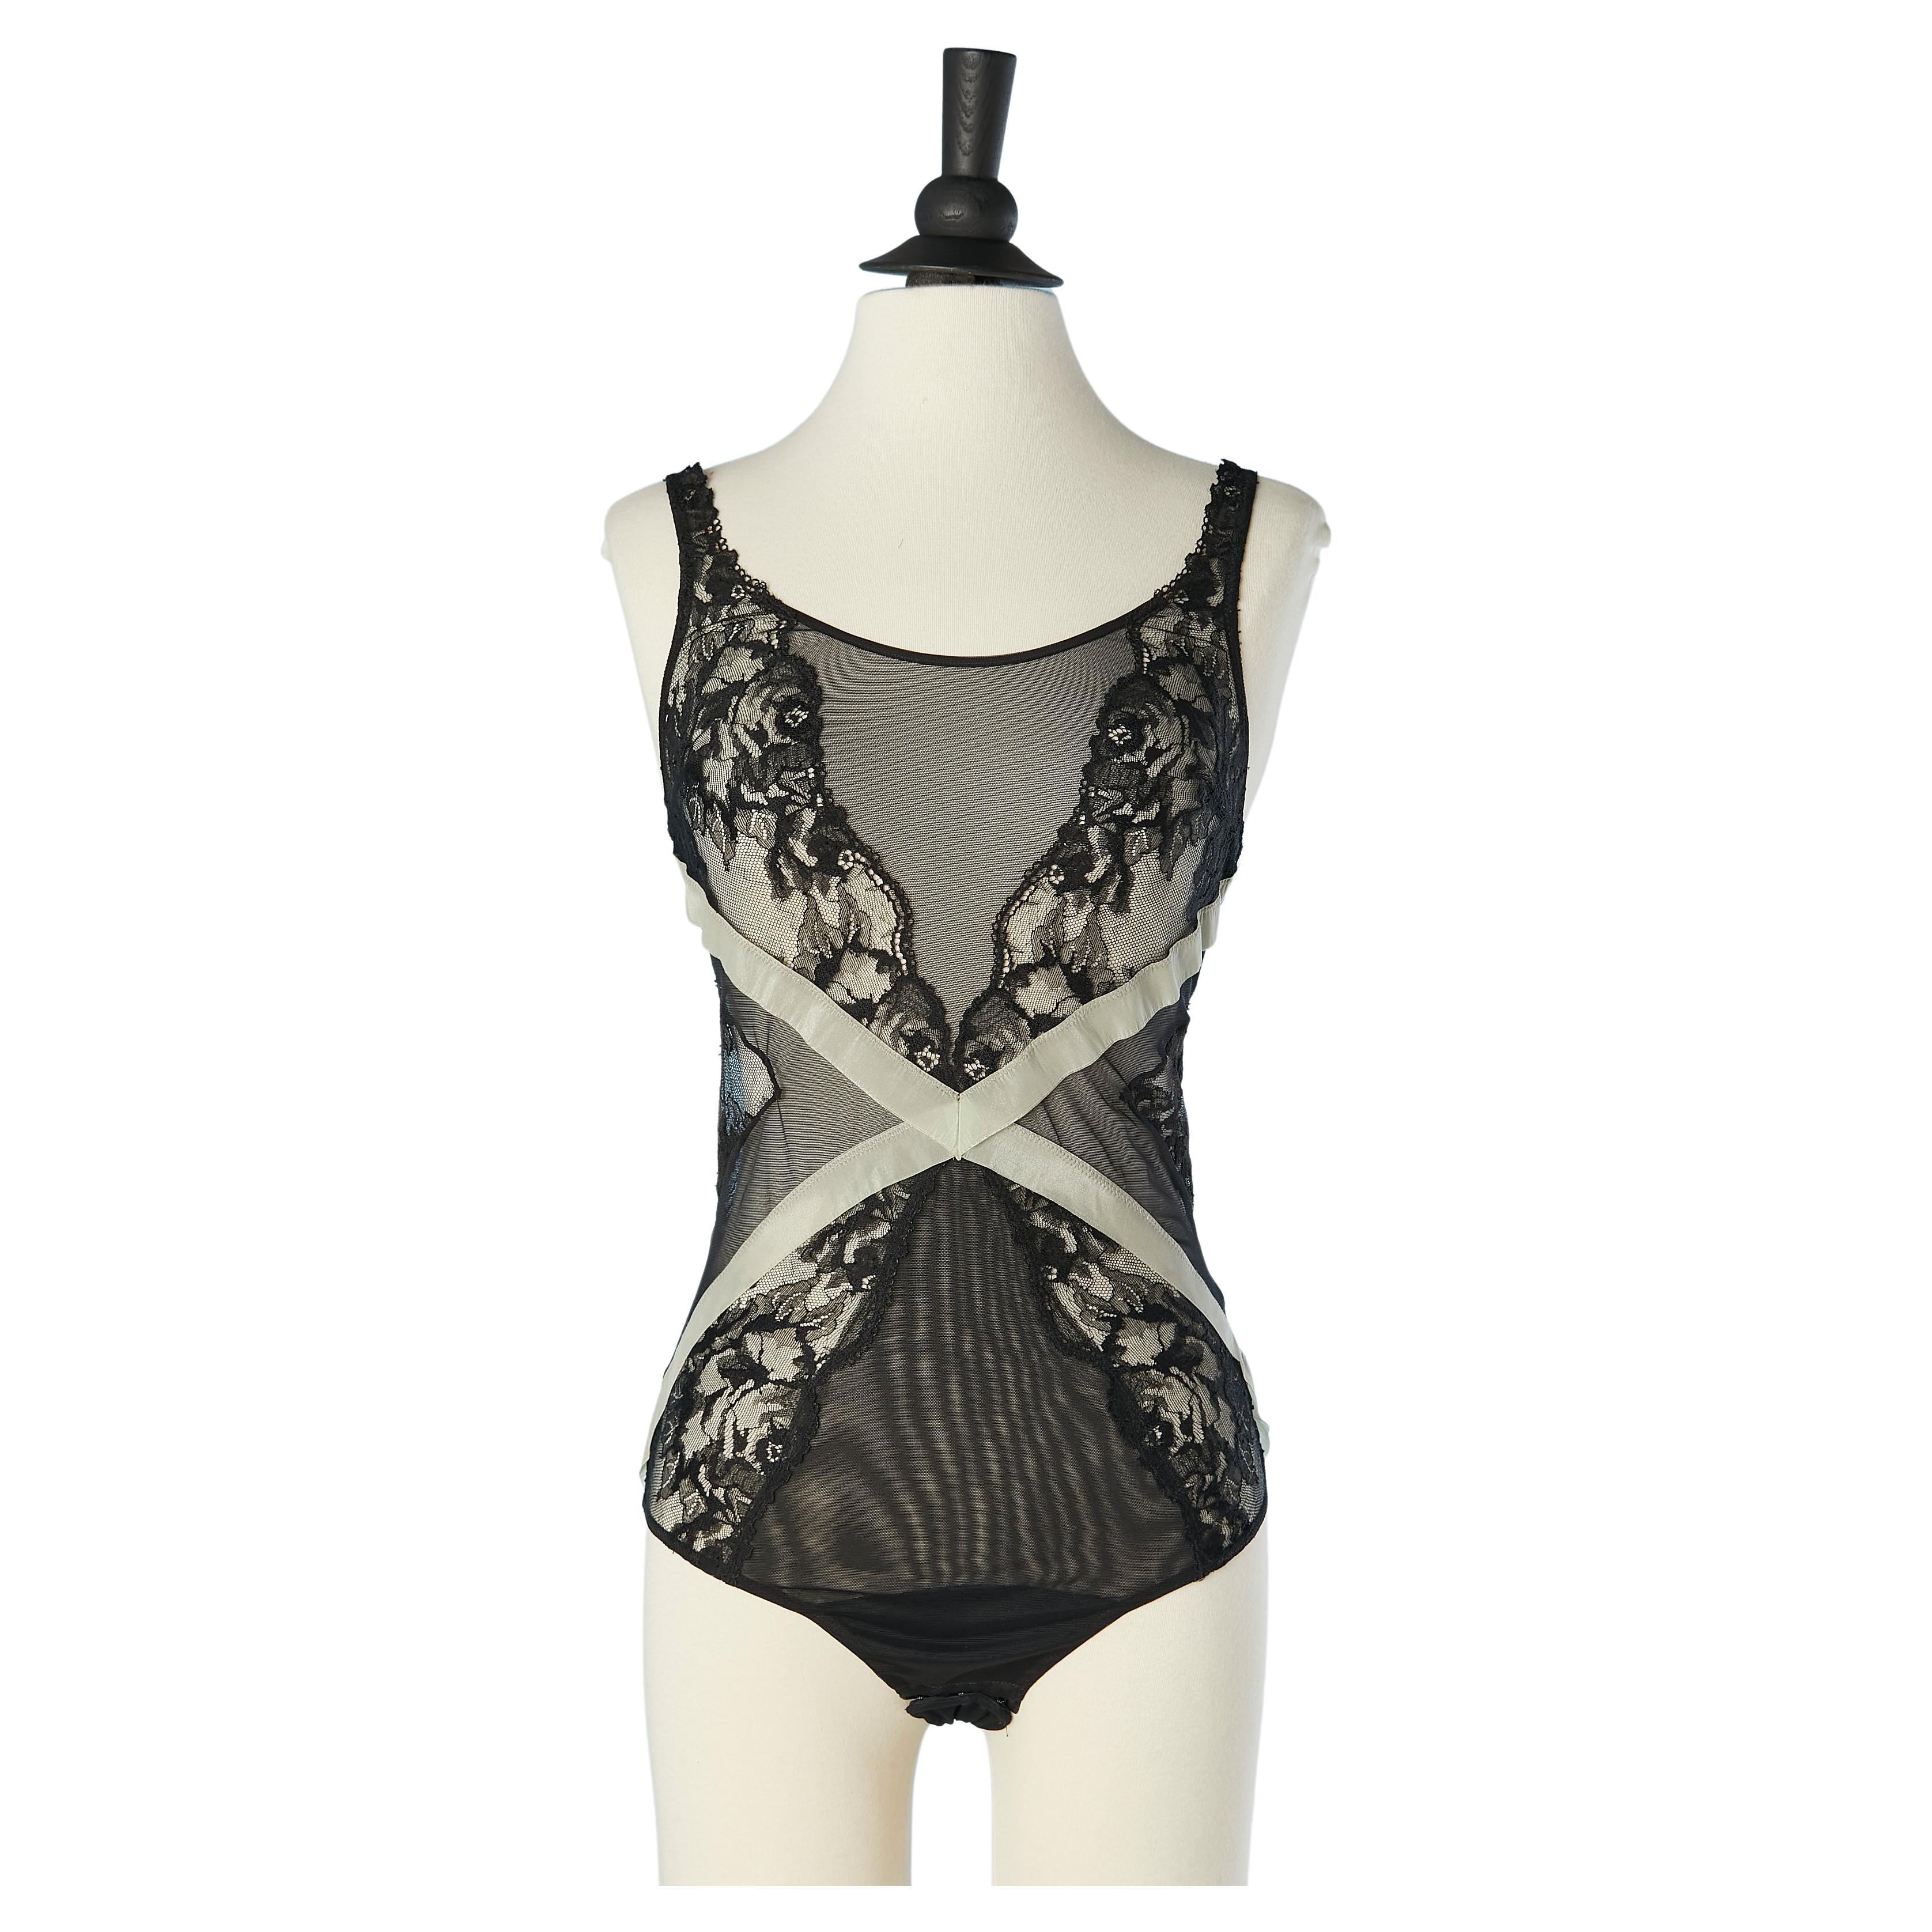 Black tulle see-through bodysuit with lace appliqué La Perla ( no brand tag) For Sale